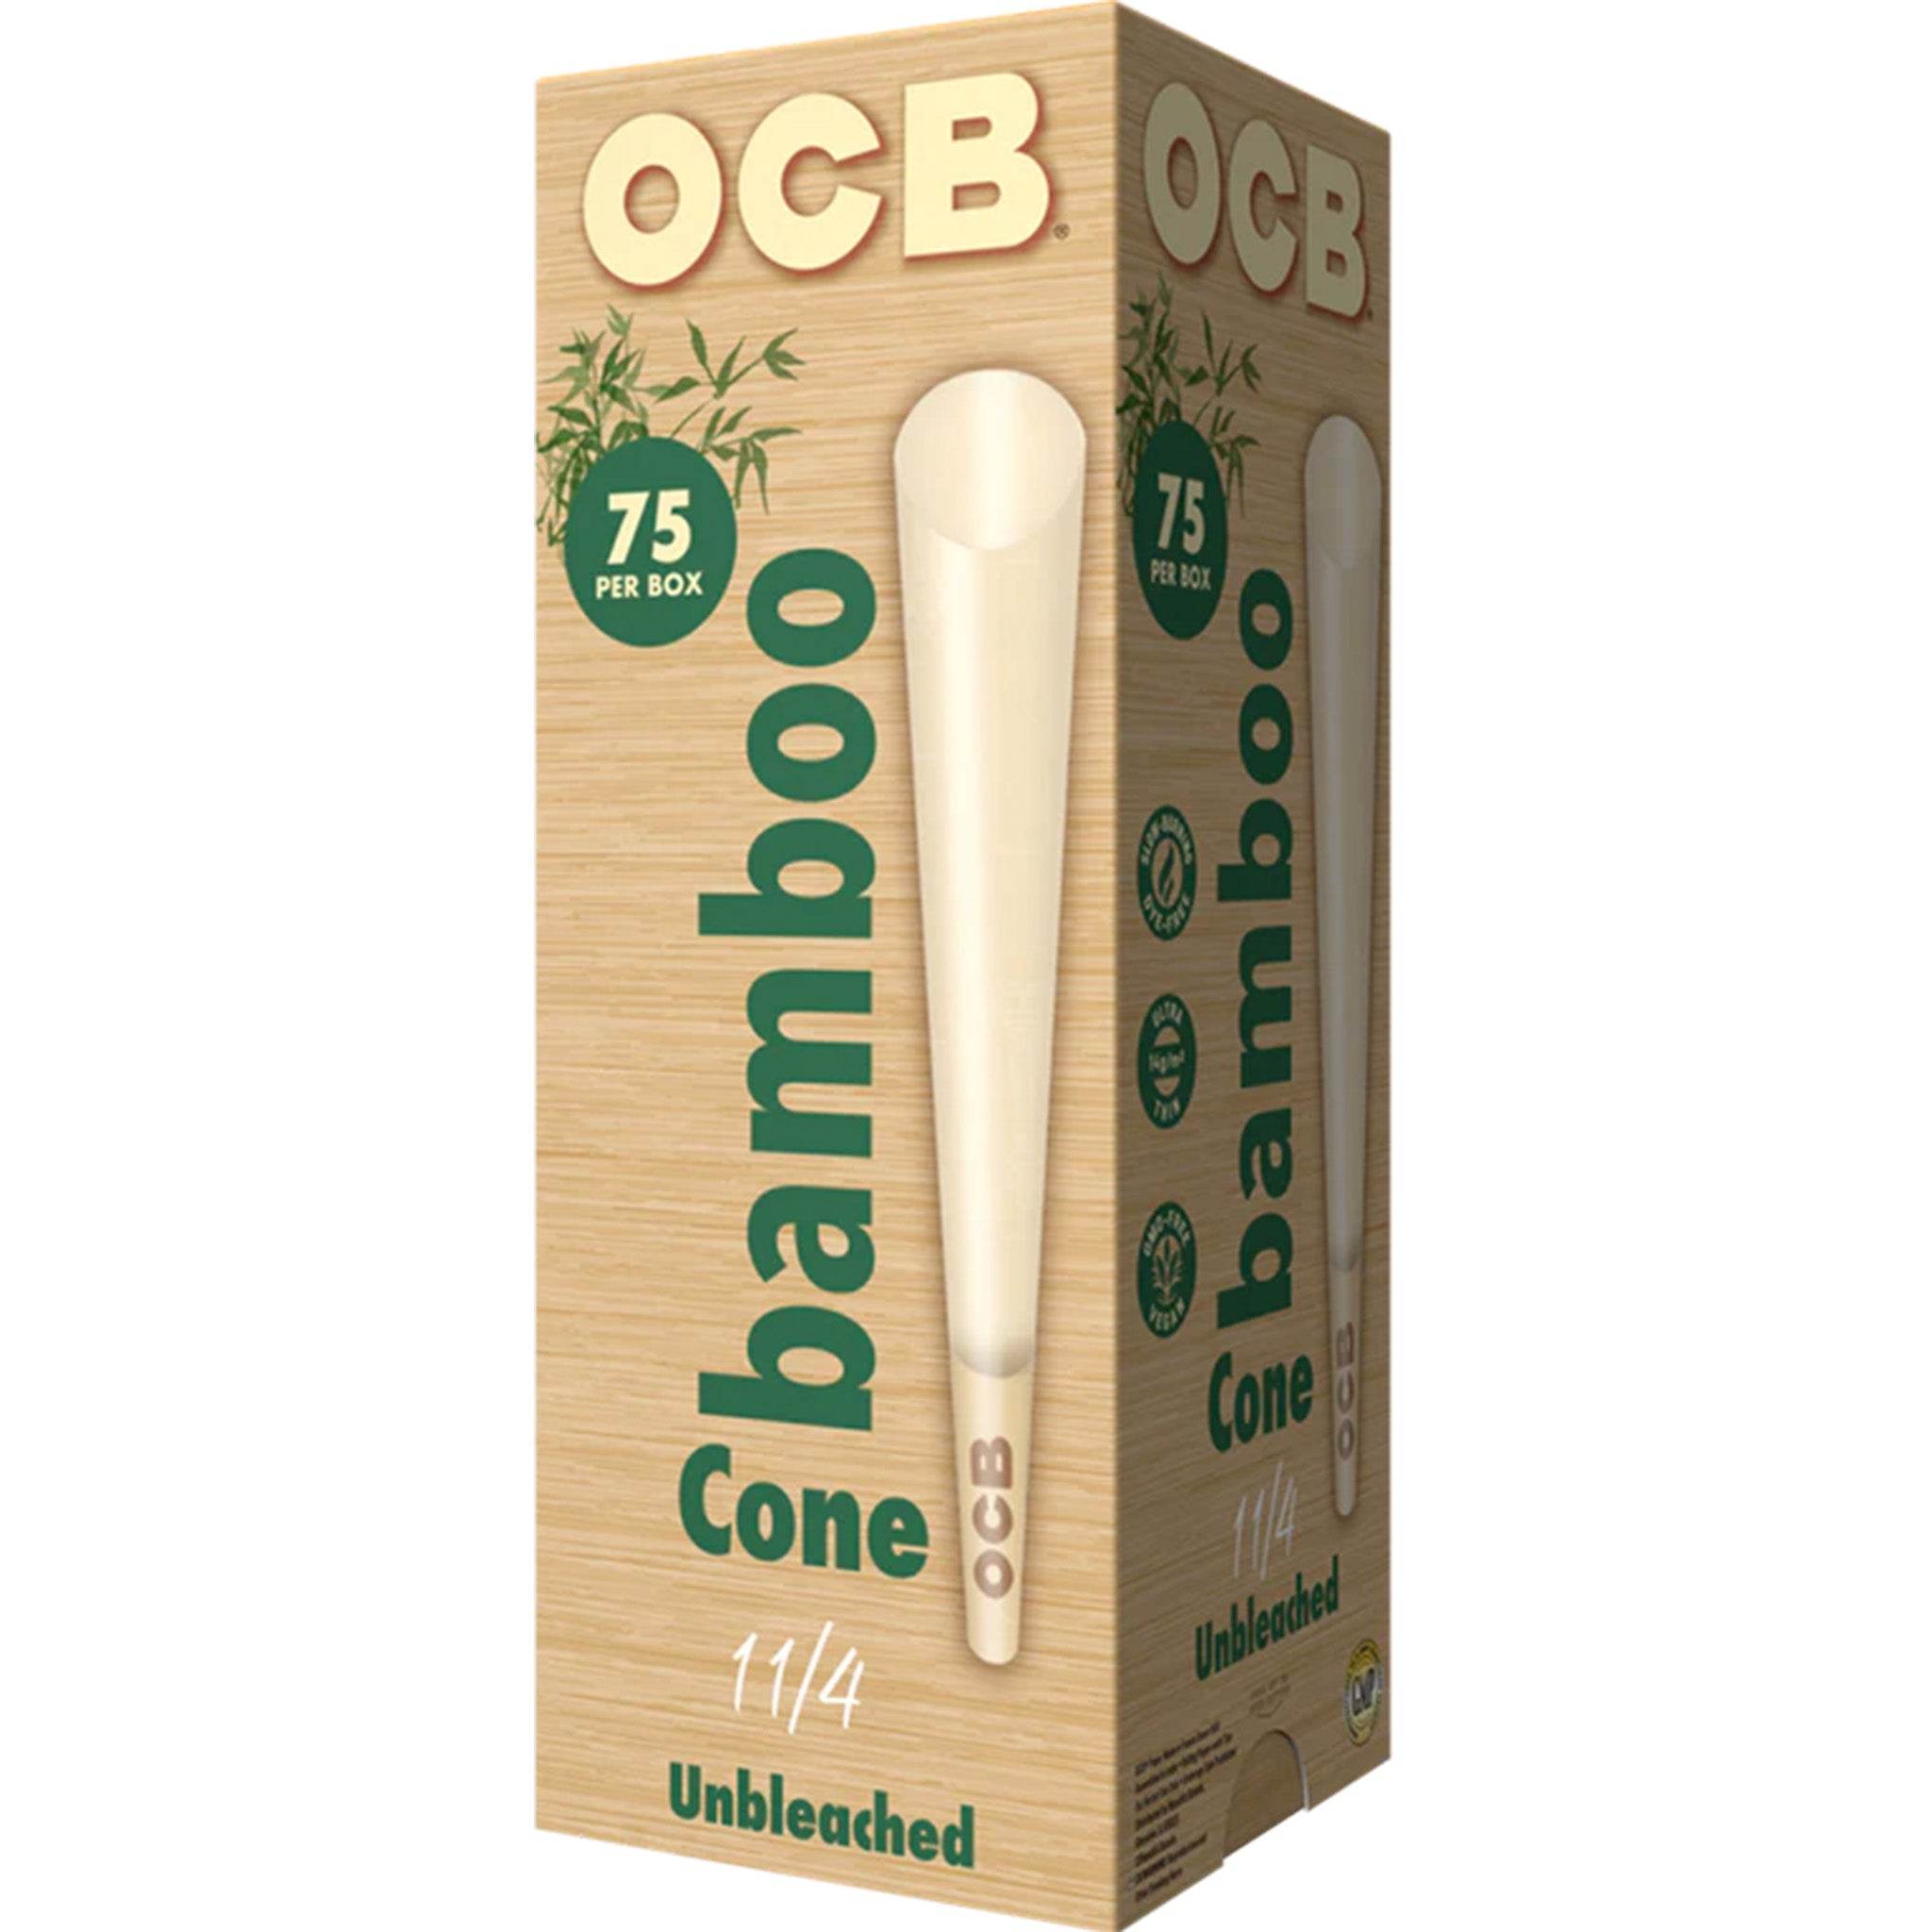 OCB Bamboo 1 1/4 Cones Large Box Cone OCB 75 